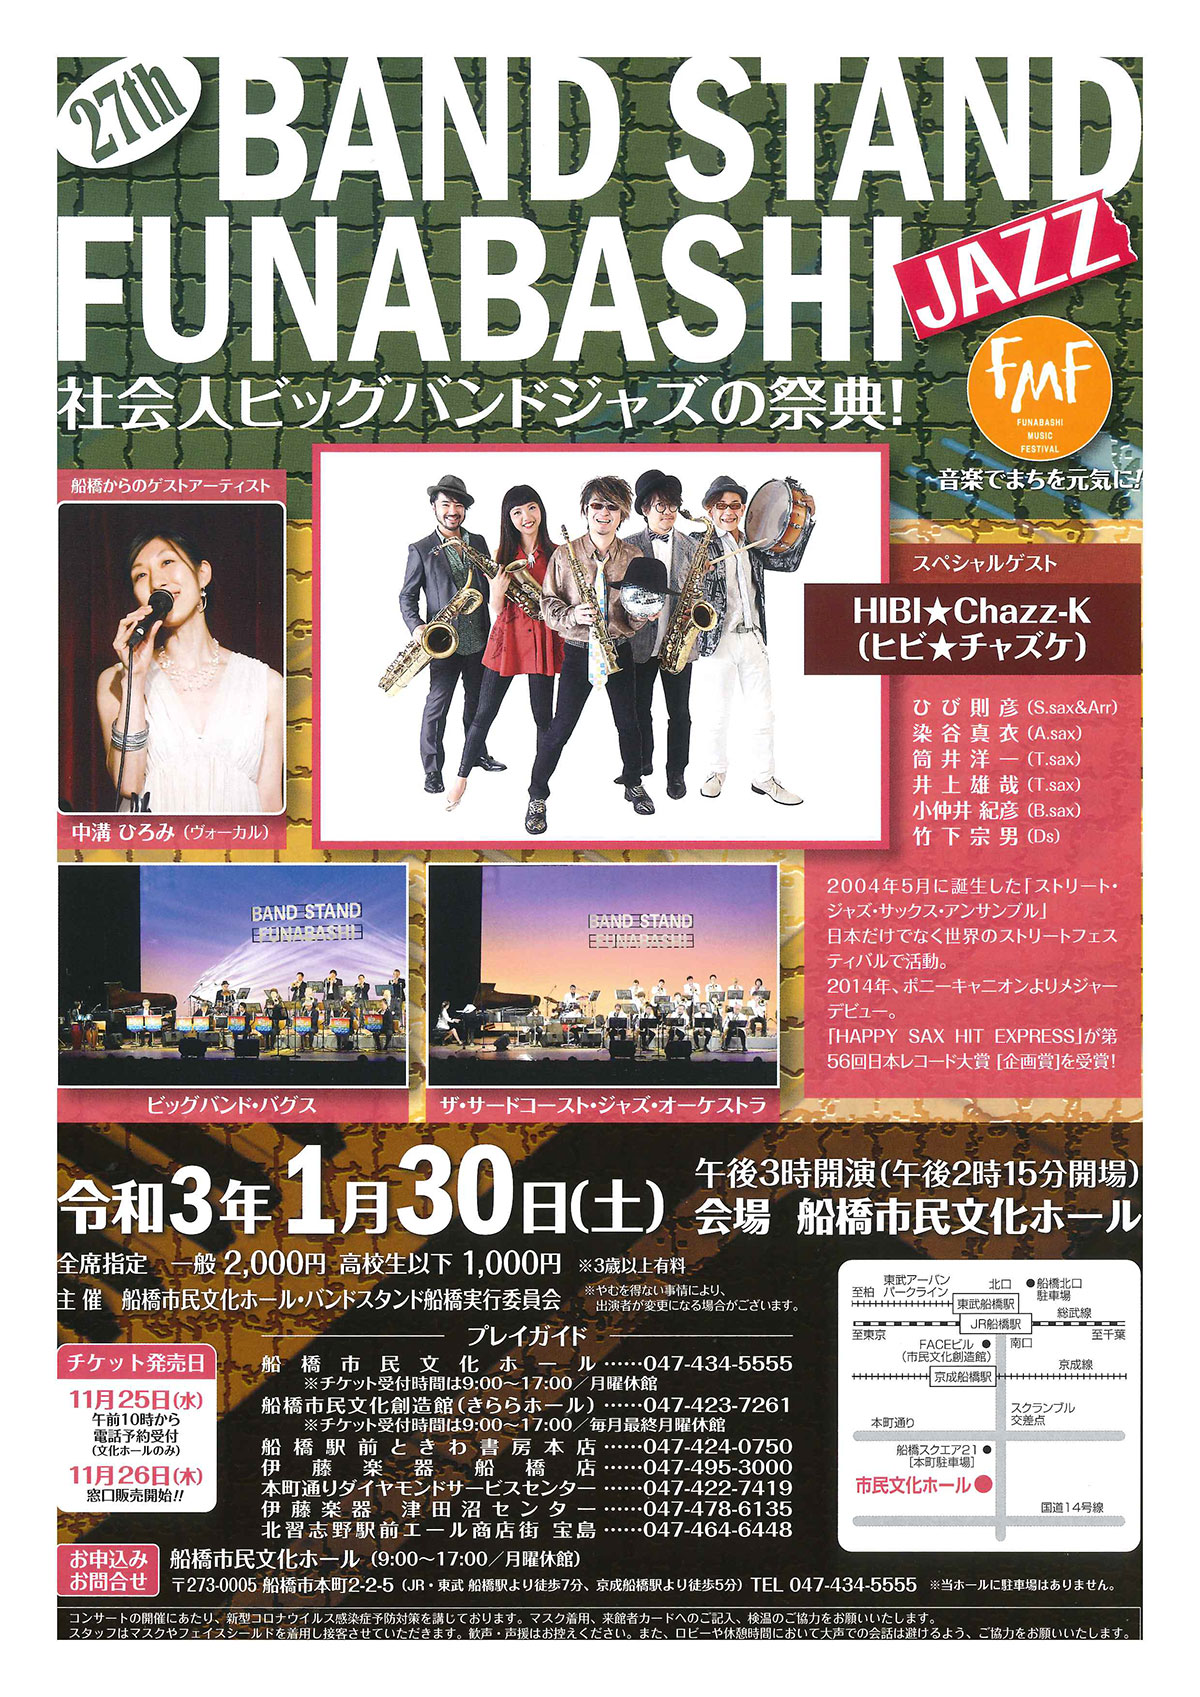 27th Band Stand Funabashi